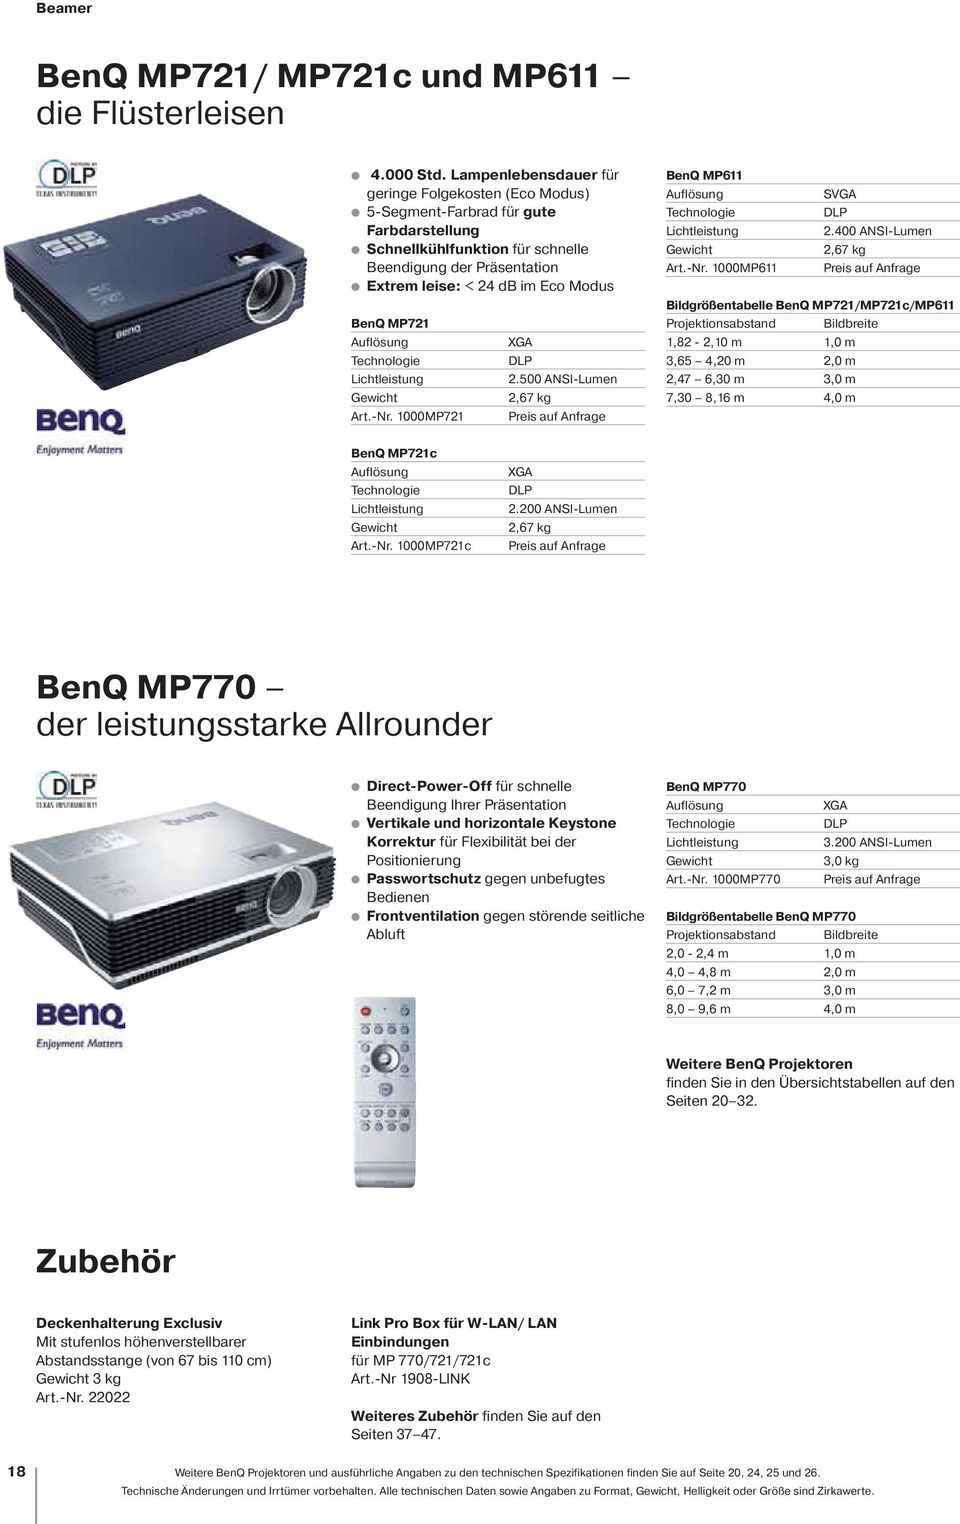 MP7 Art.-Nr. 000MP7.500 ANSI-Lumen,67 kg BenQ MP6 SVGA.400 ANSI-Lumen,67 kg Art.-Nr. 000MP6 Bildgrößentabelle BenQ MP7/MP7c/MP6,8-,0m,0m 3,65 4,0 m,0 m,47 6,30 m 3,0 m 7,30 8,6 m 4,0 m BenQ MP7c Art.